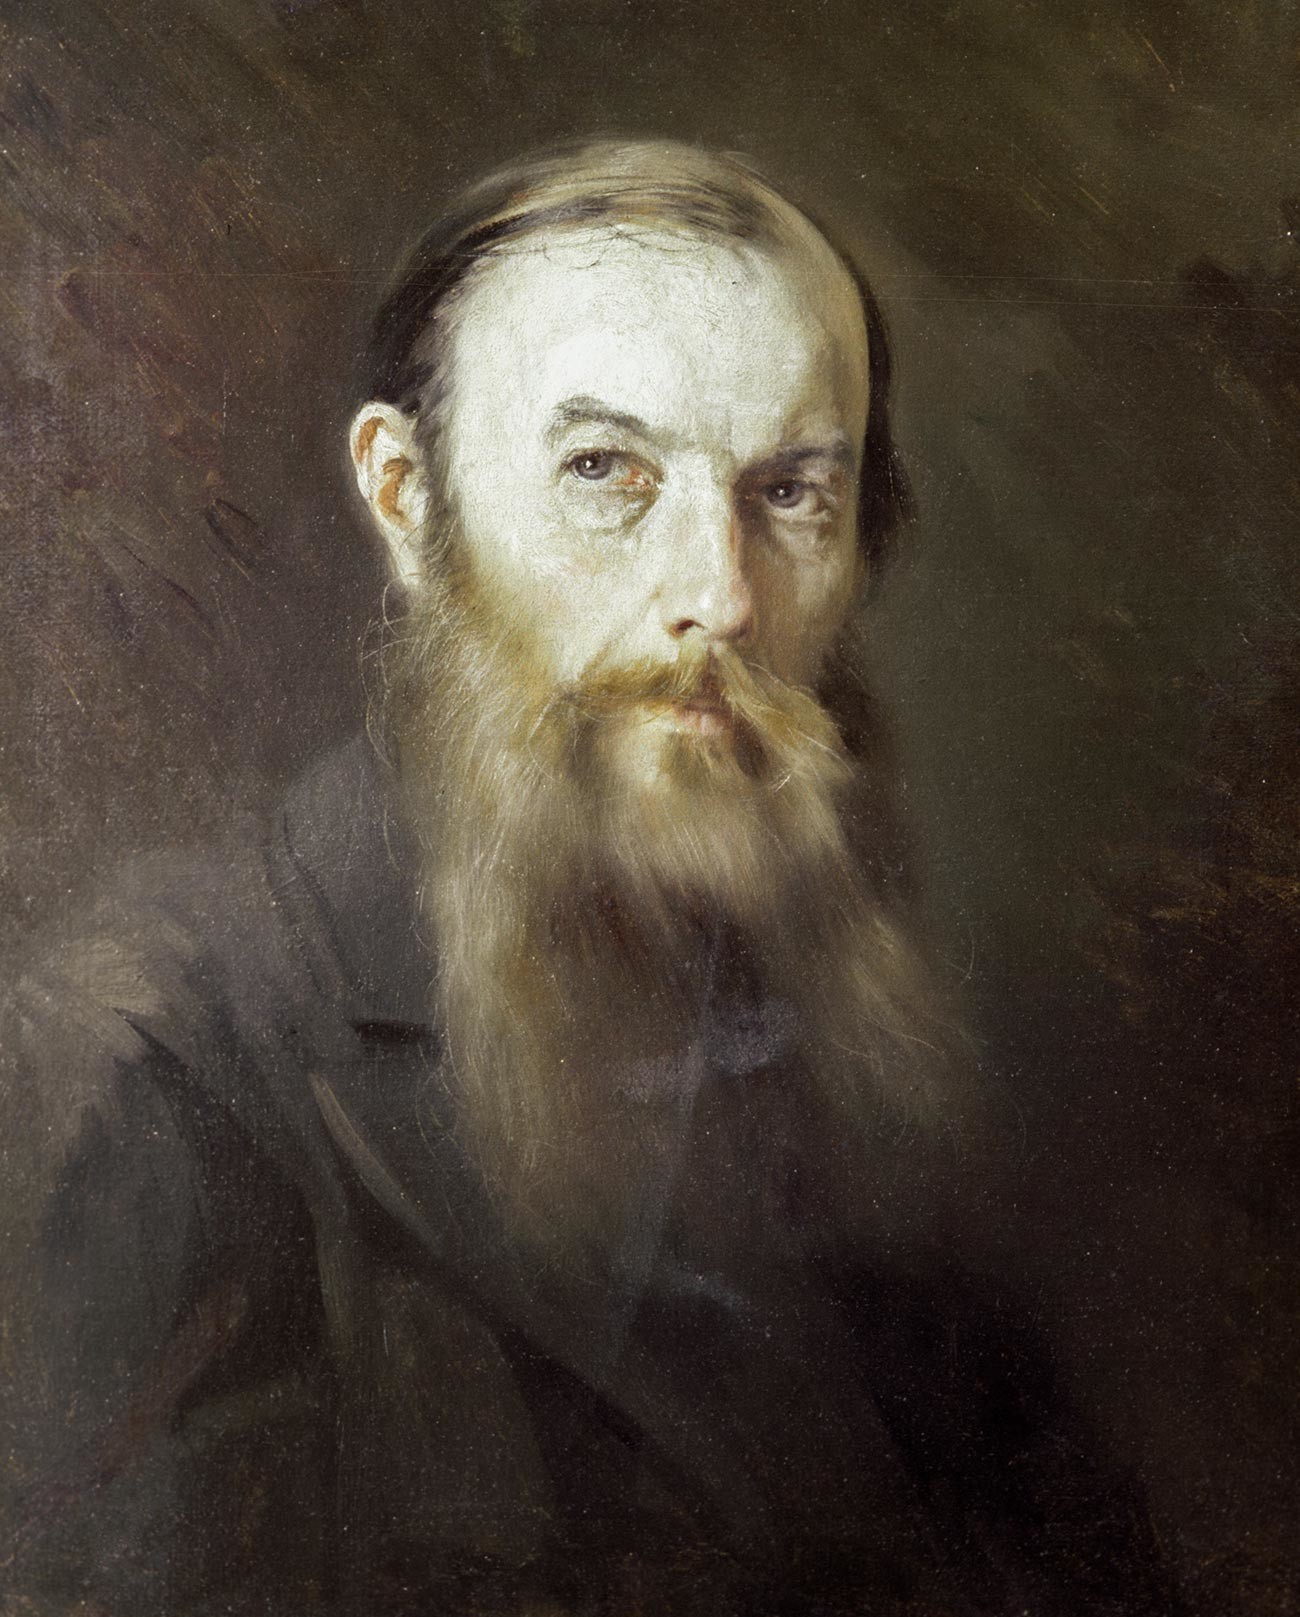 Pembuatan ulang potret Fyodor Dostoevsky oleh M. Shcherbatov.